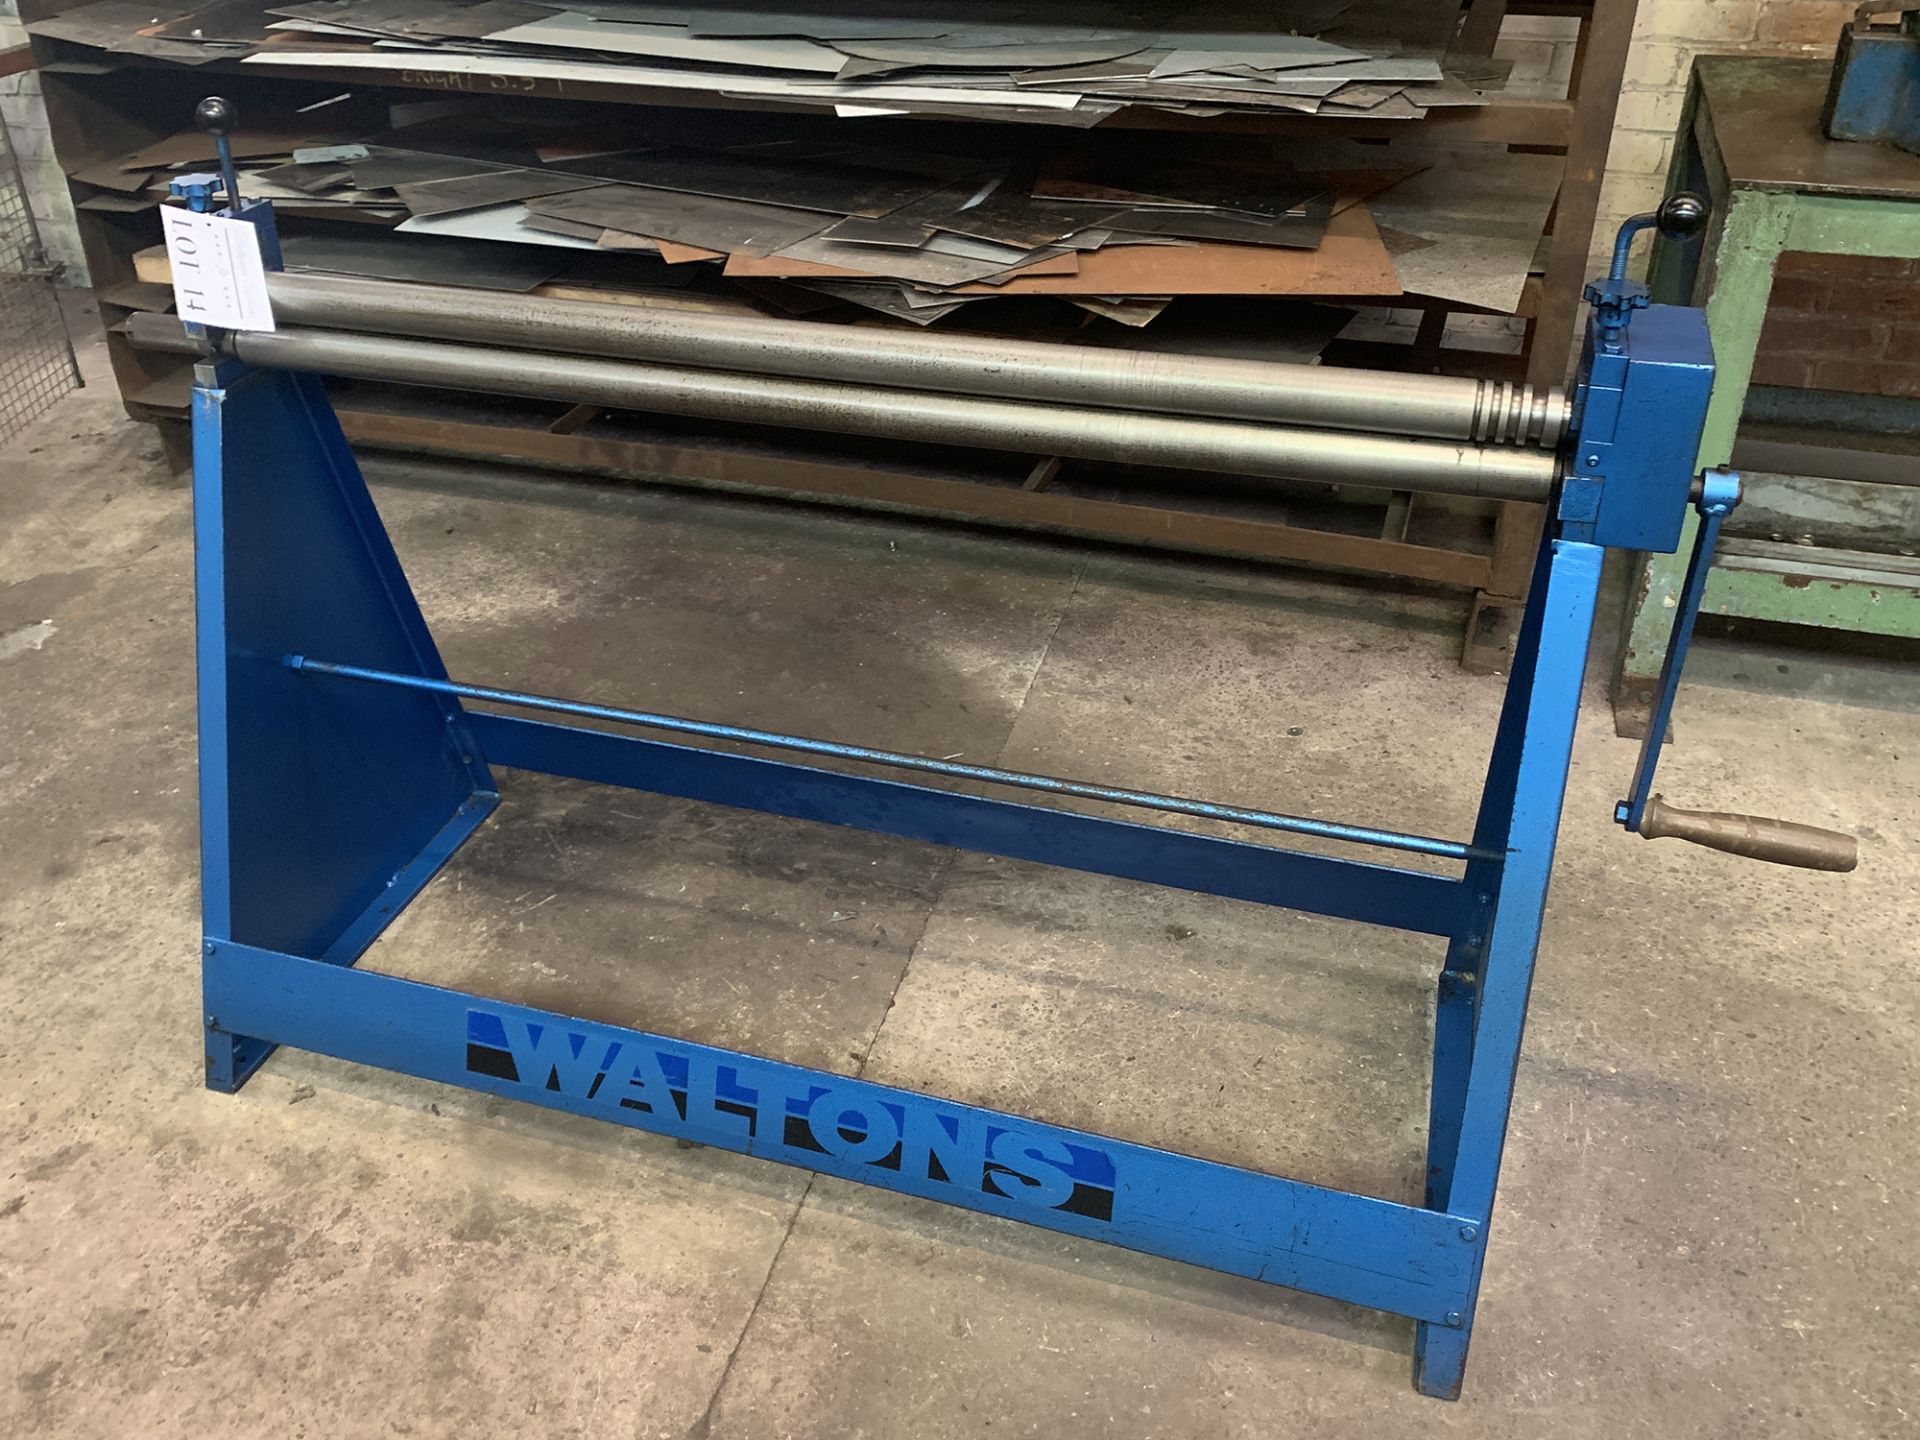 Waltons Initial Pinch Manual Bending Rolls. Capacity 50" x 2'' Diameter Roll.